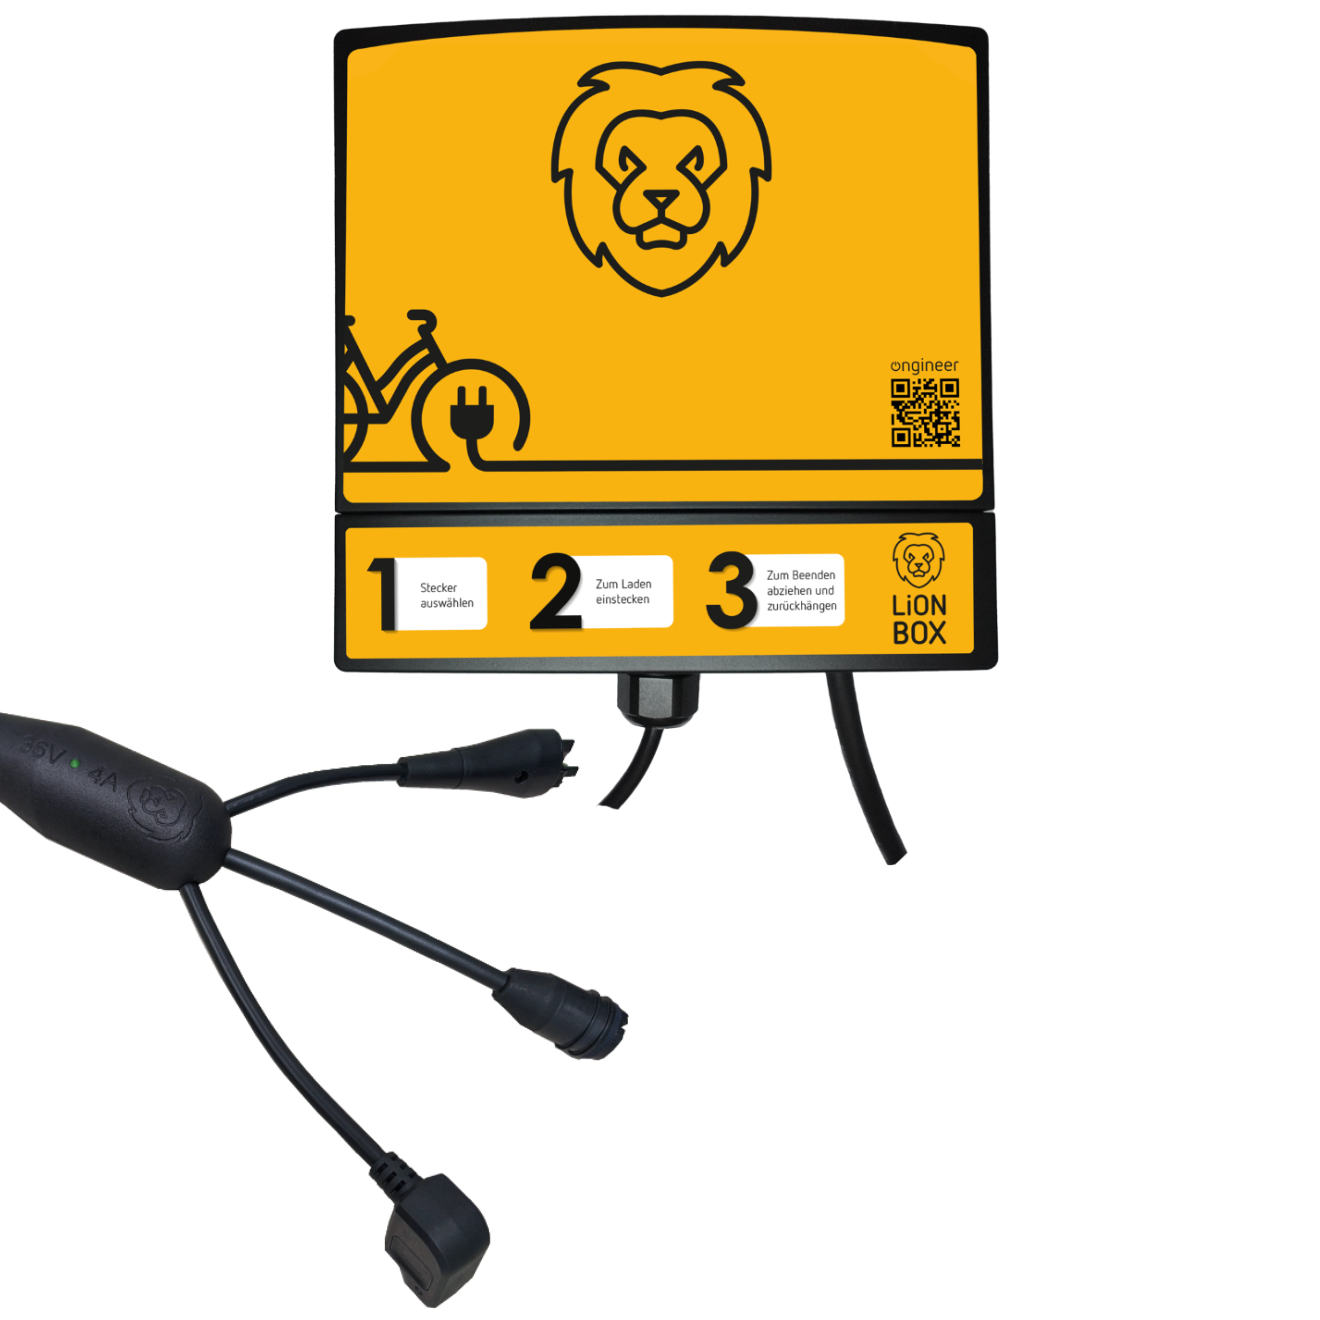 ONgineer LiON box S_BO-RO-SH  - space-saving universal 36 V e-bike charging station (wallbox)